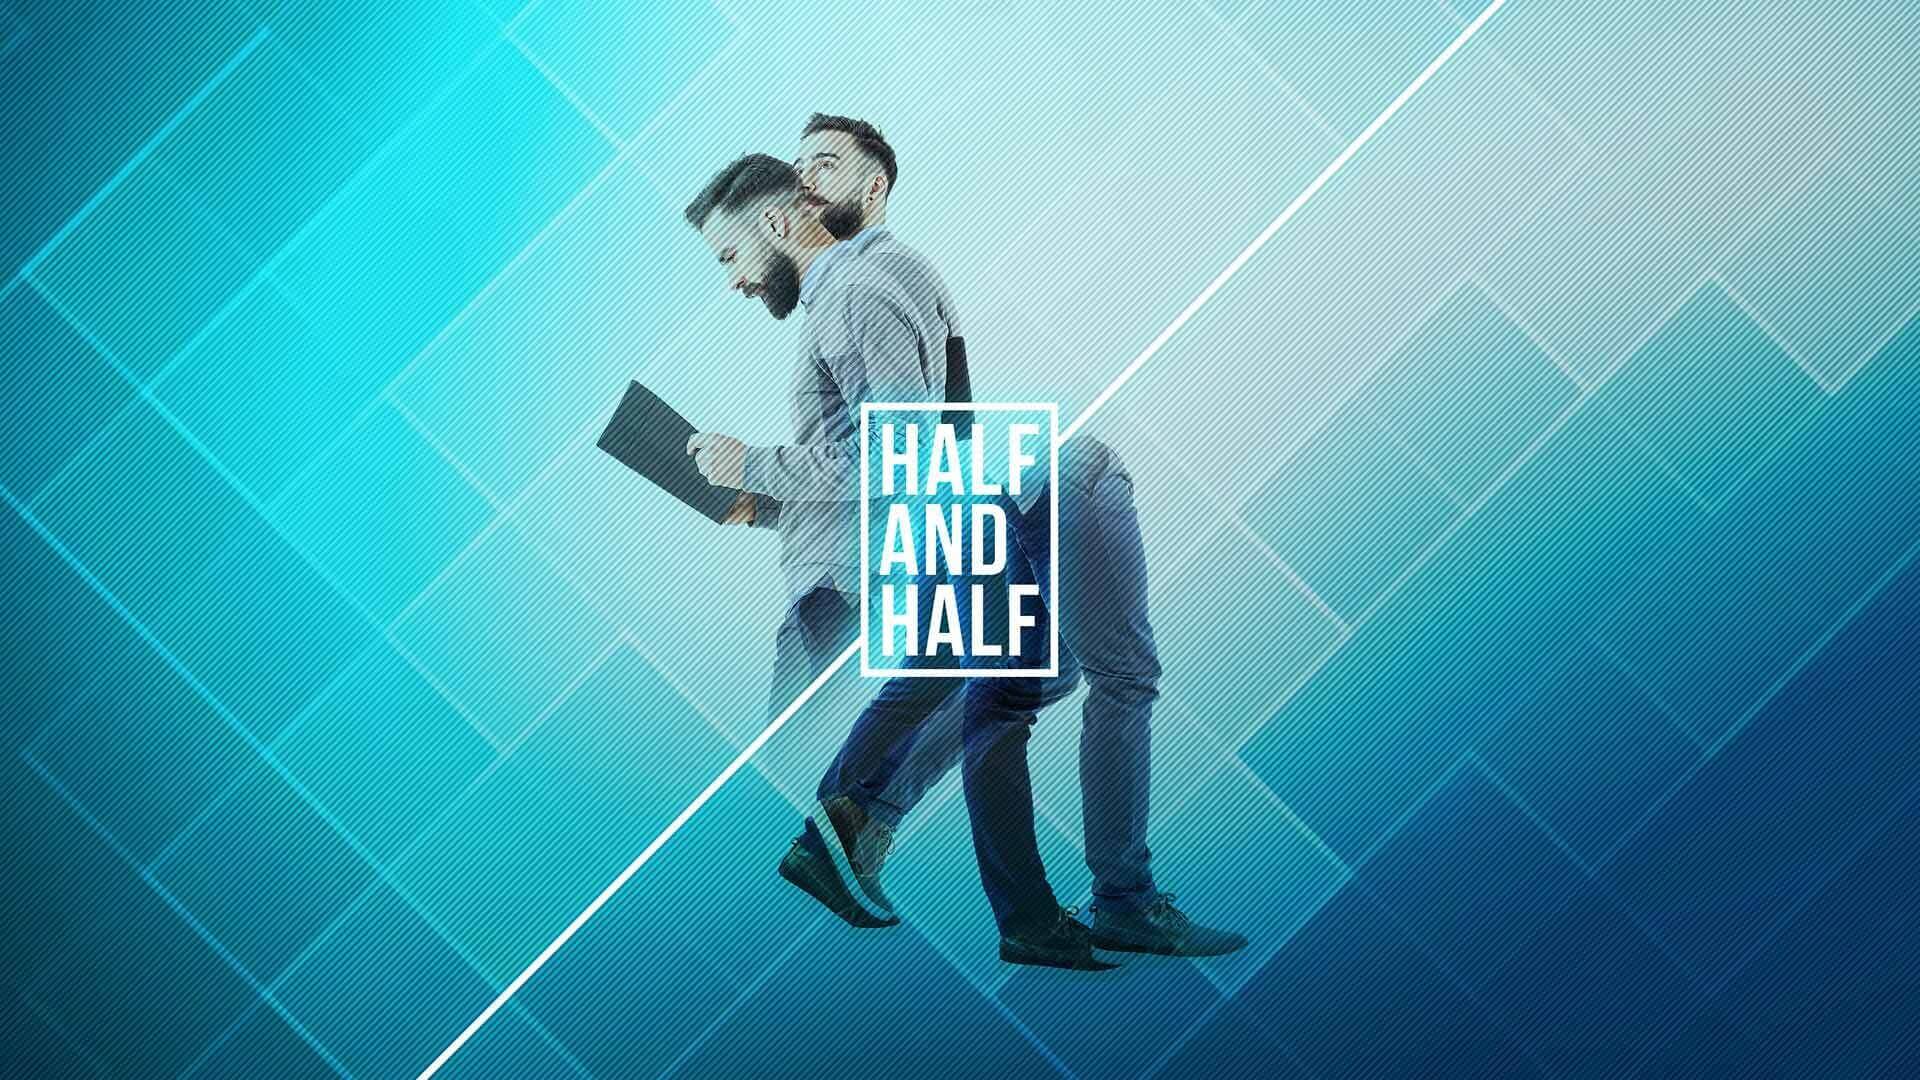 Half and Half